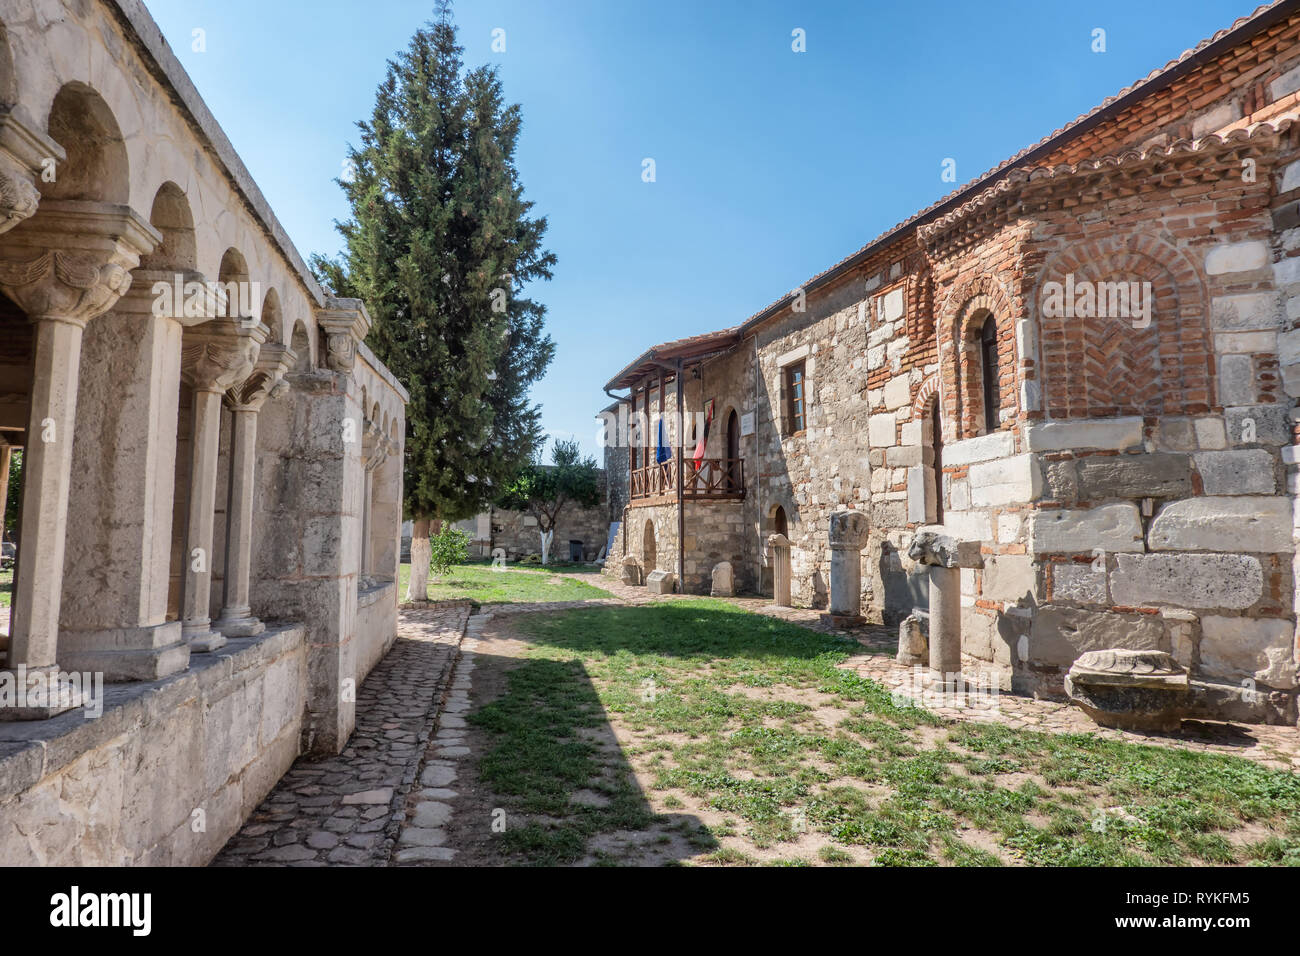 Monastry in the ancient city of Apollonia, Albania Stock Photo